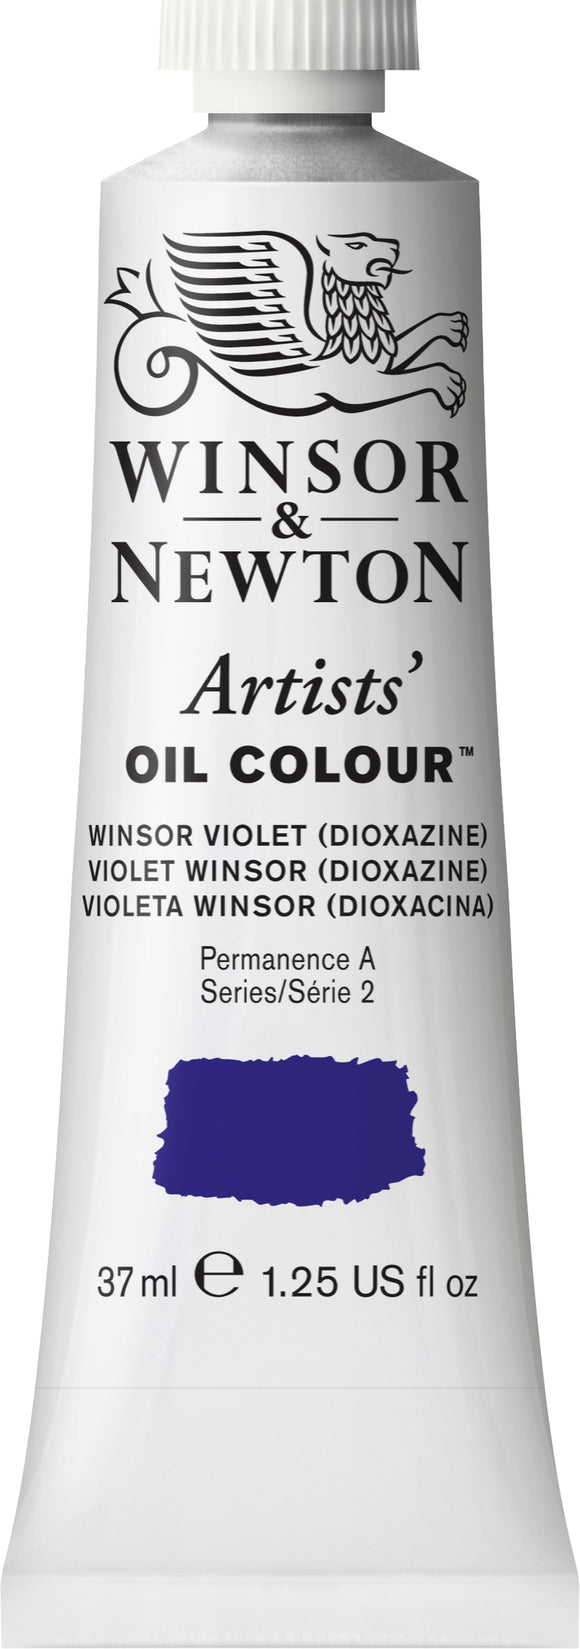 Winsor & Newton Artists Oil Color Winsor Violet Dioxozine 37Ml